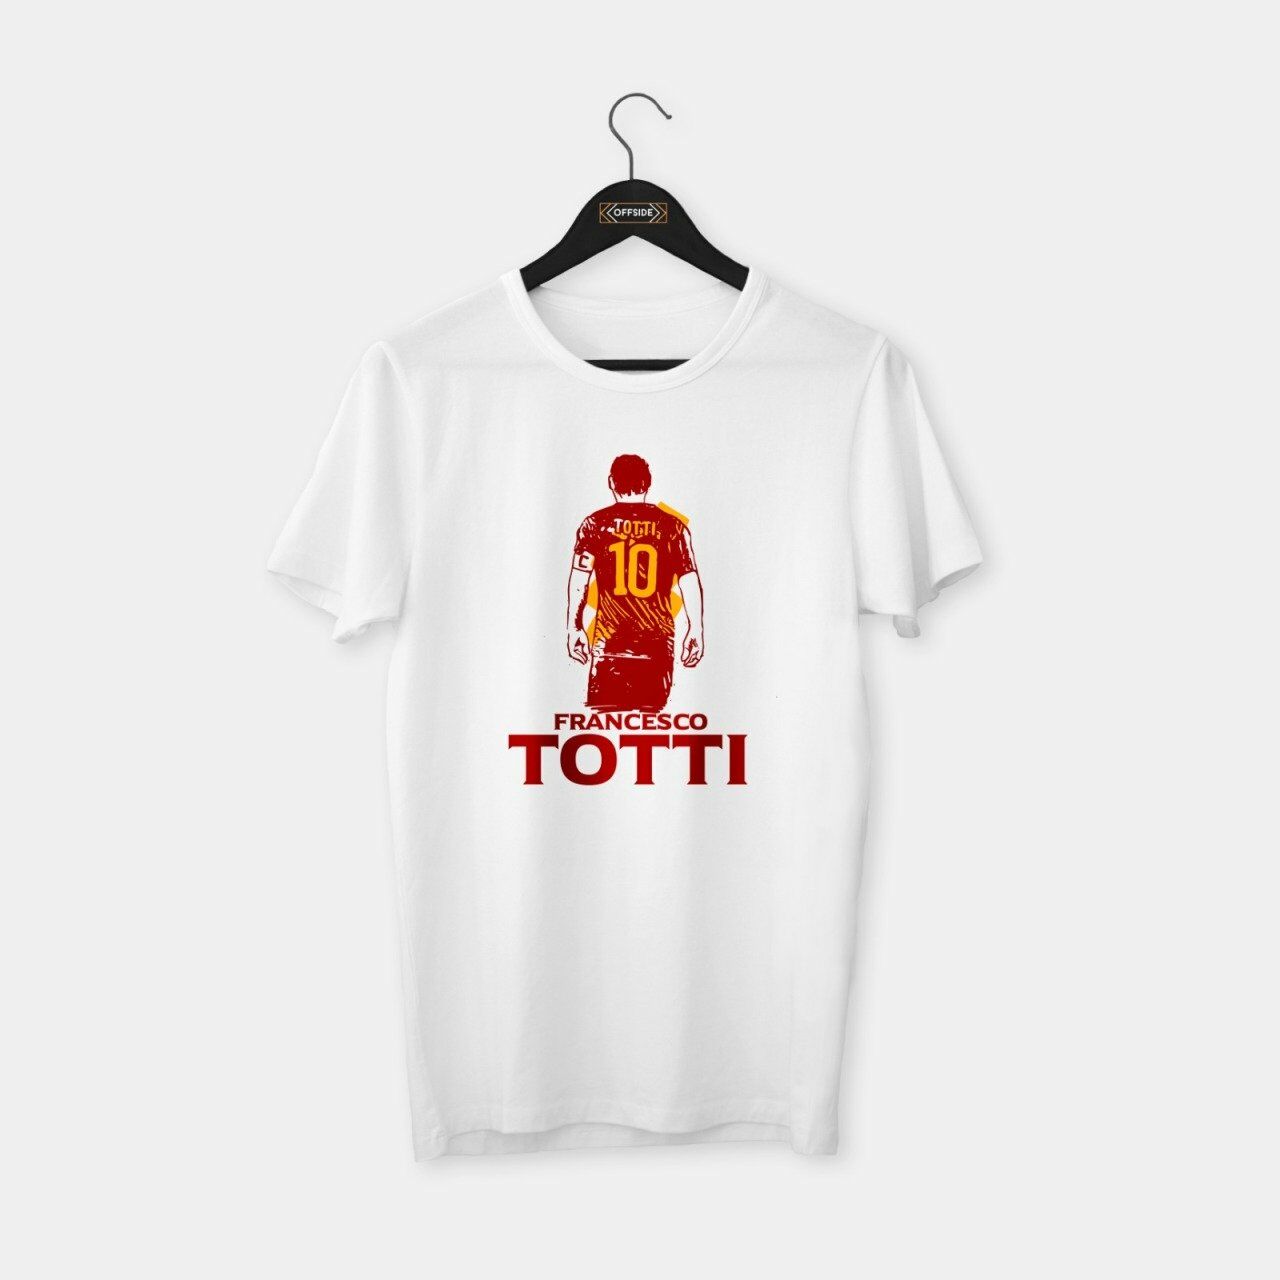 Totti 10 T-shirt